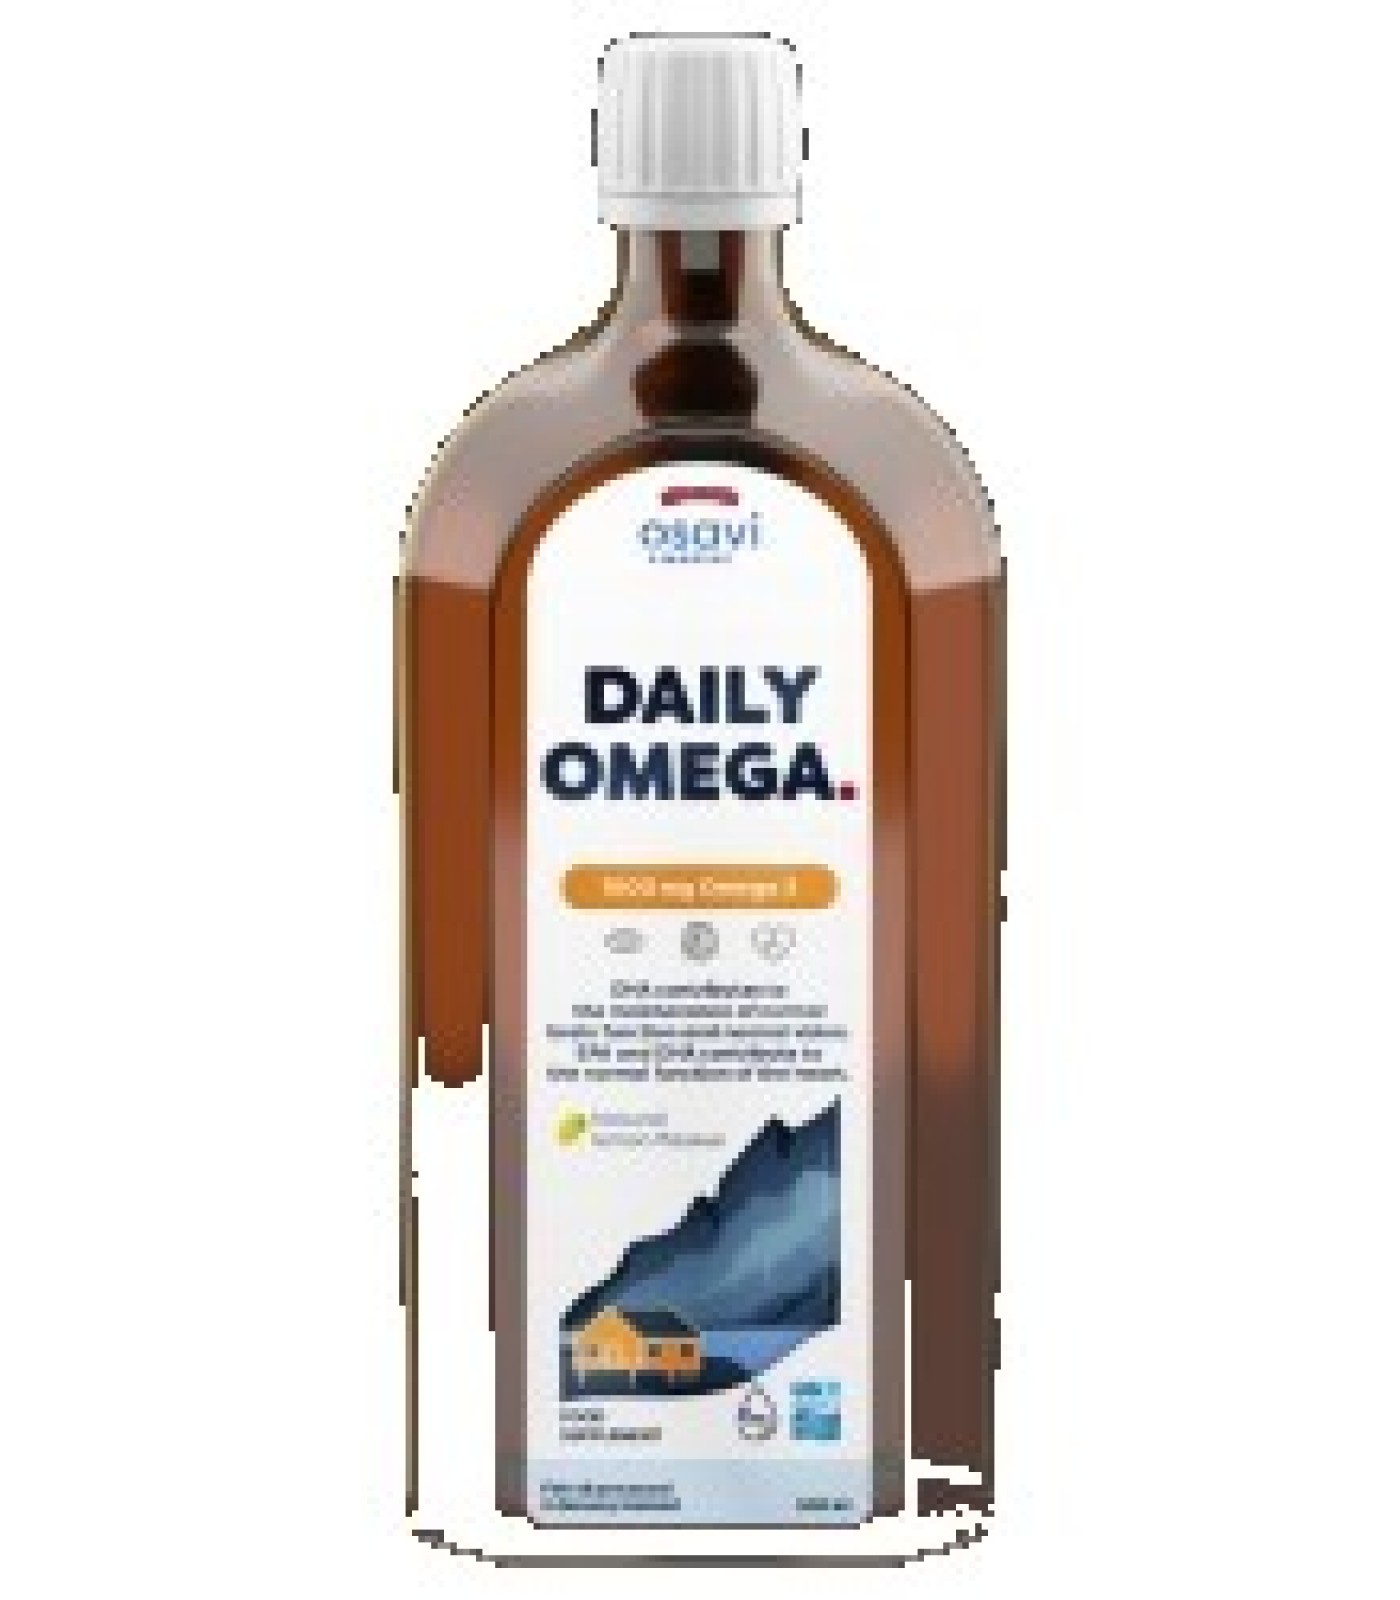 Osavi - Daily Omega Liquid | Natural Lemon Flavored / 500 мл